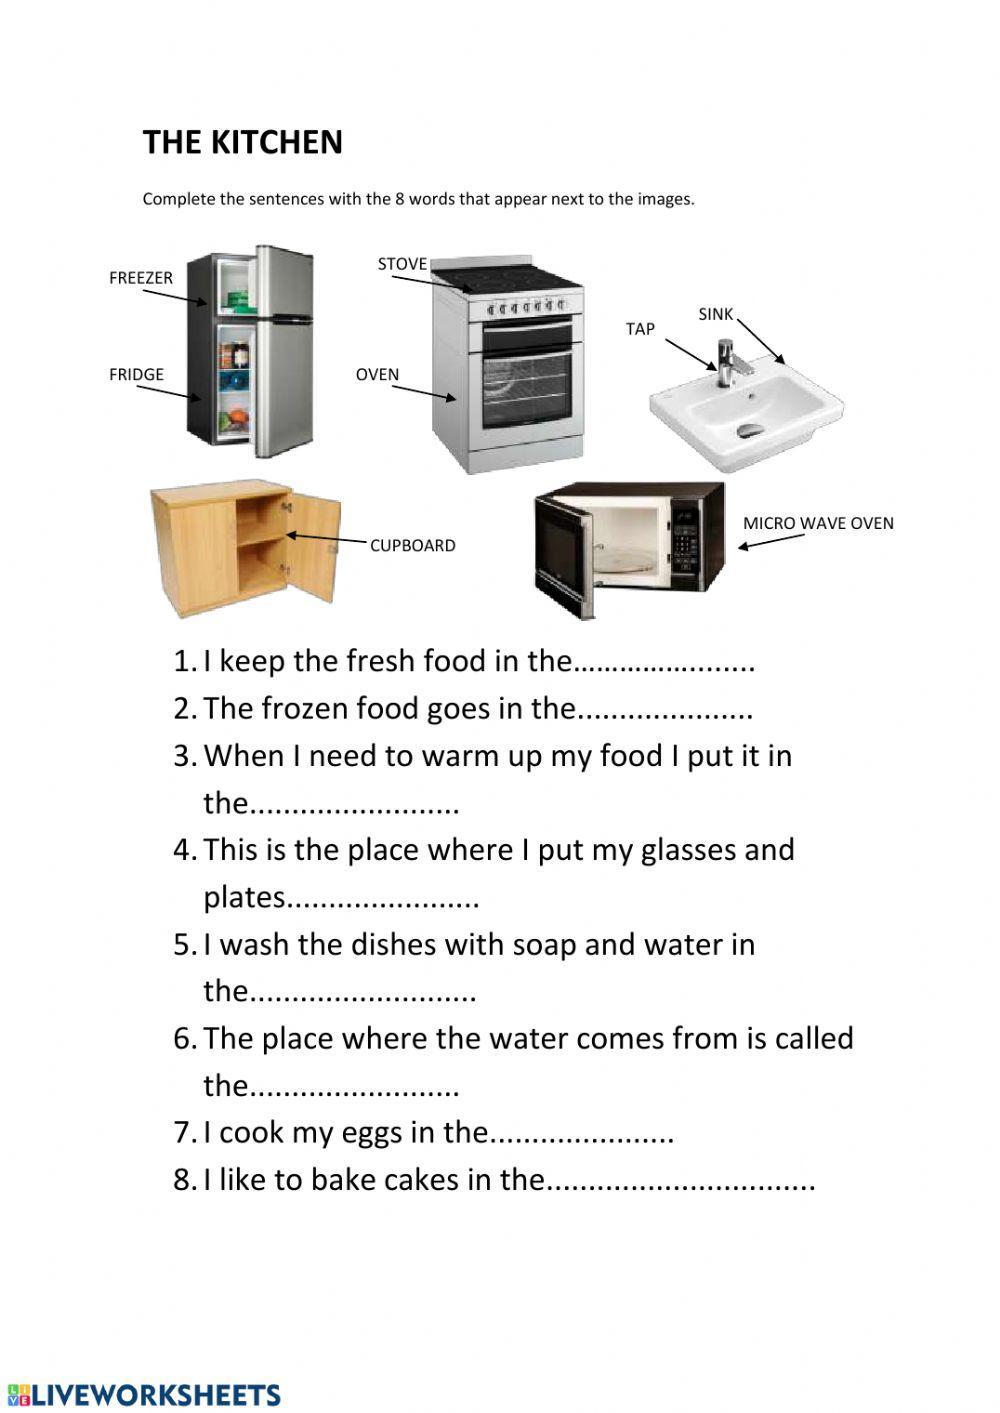 The kitchen vocabulary